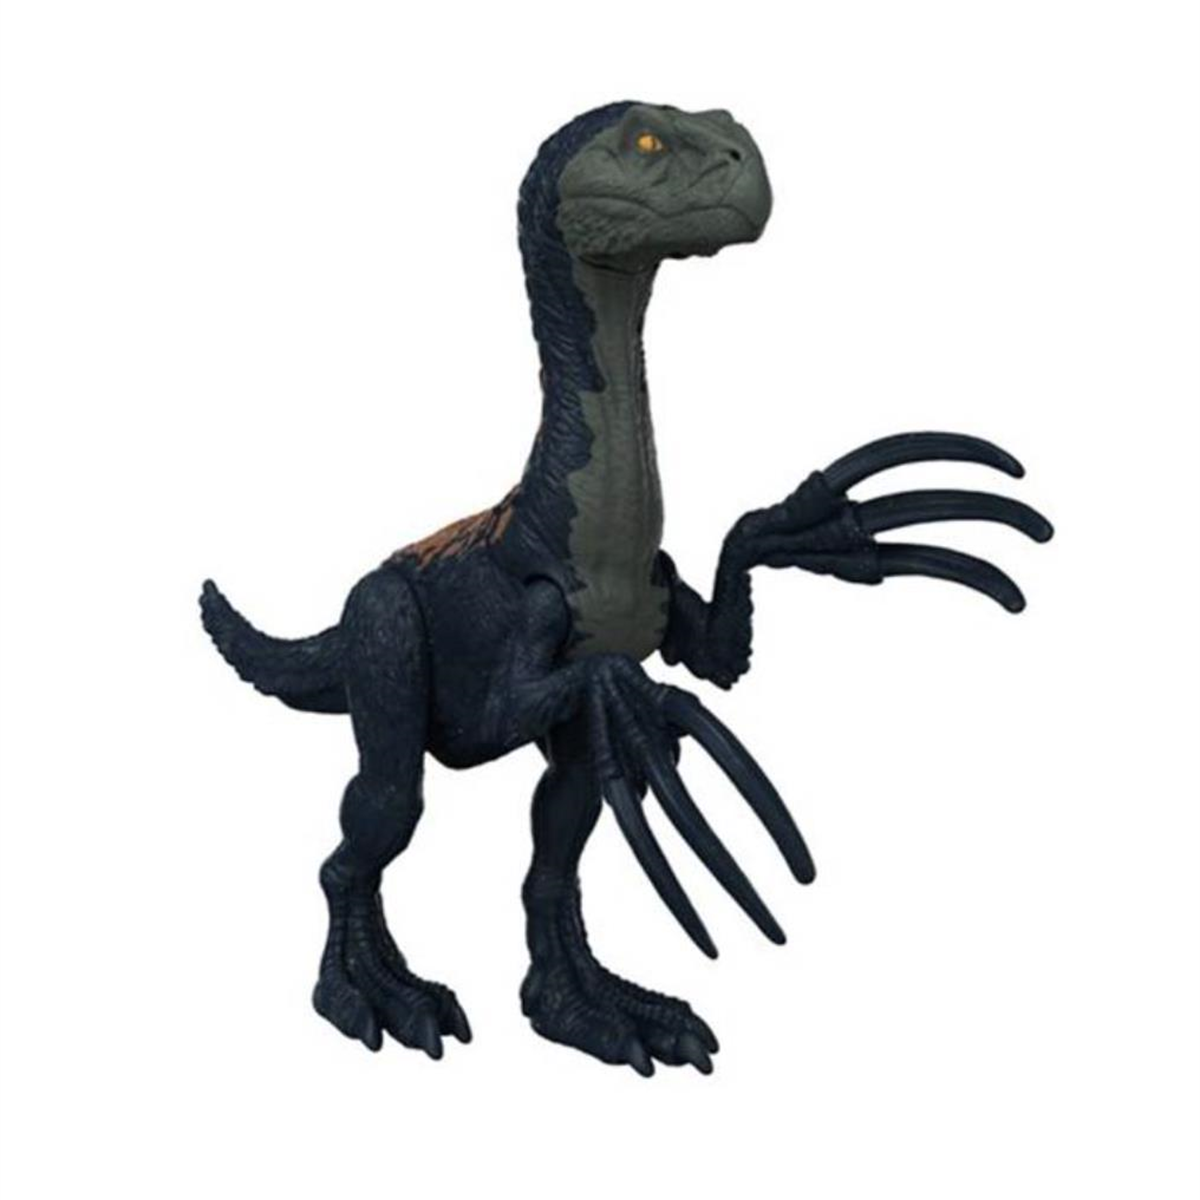 Jurassic World 6' Dinozor Figürü GWT49-GWT51 | Toysall